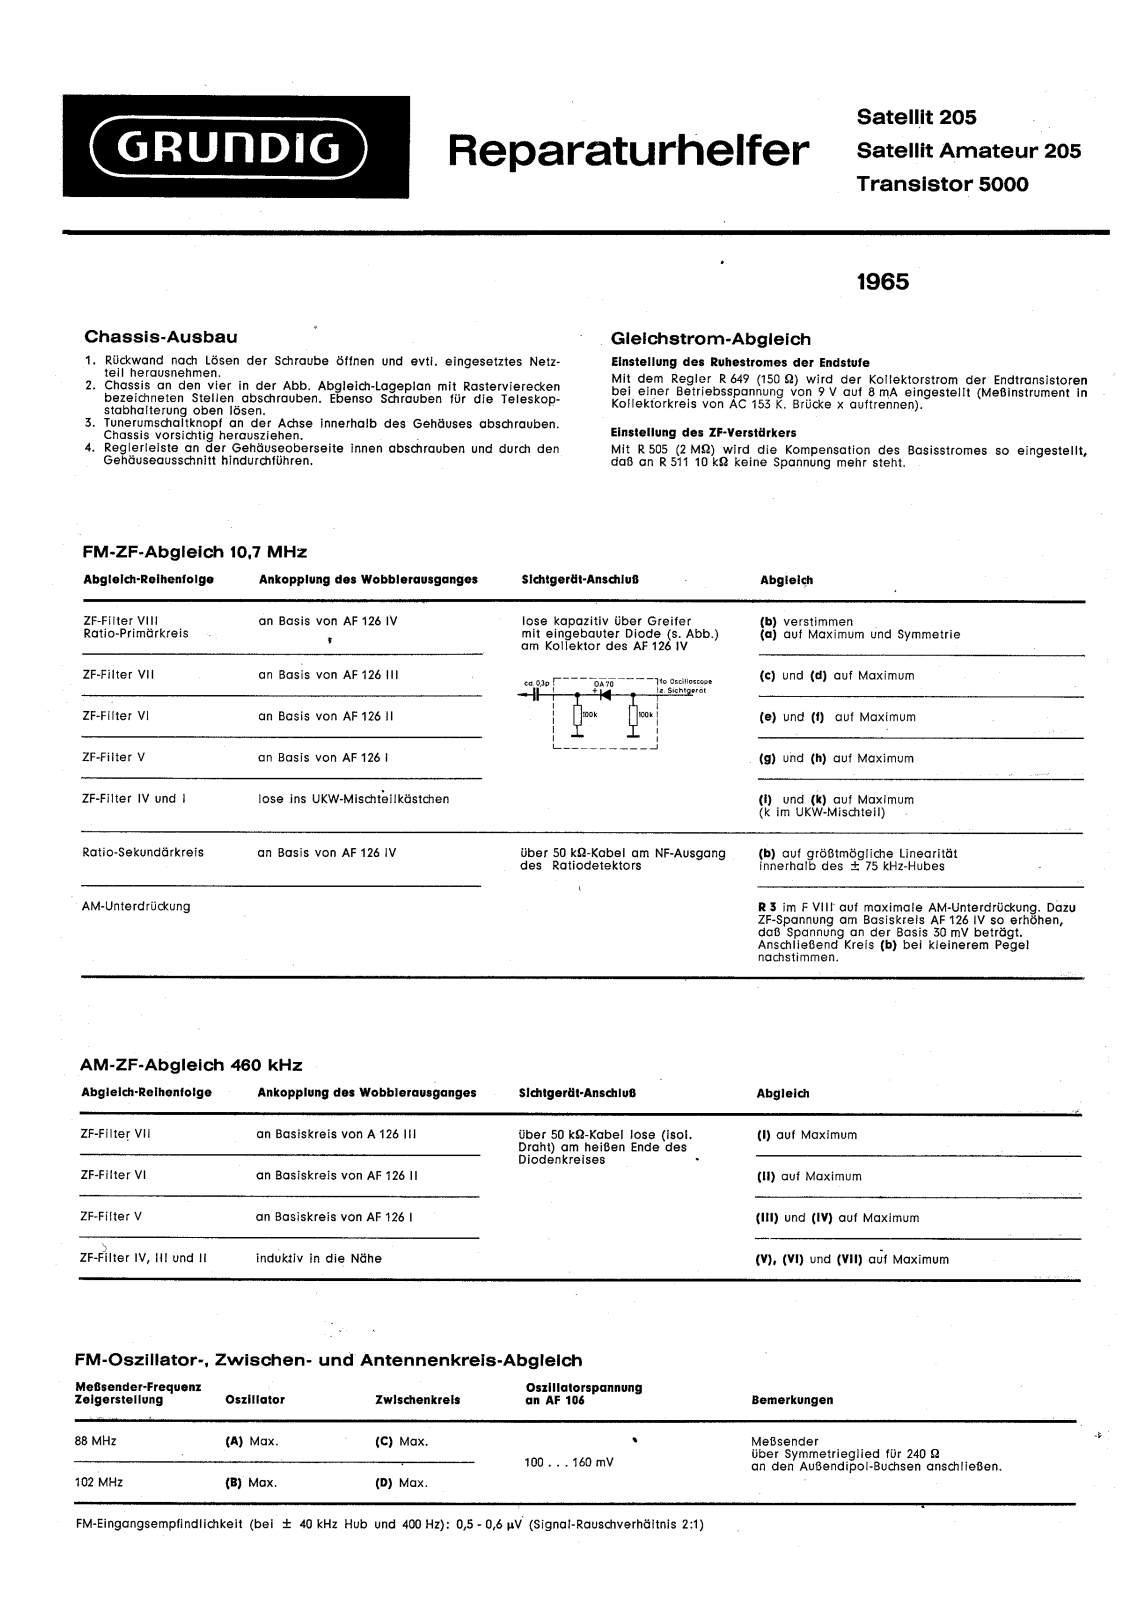 Grundig Satellit-205 Service Manual